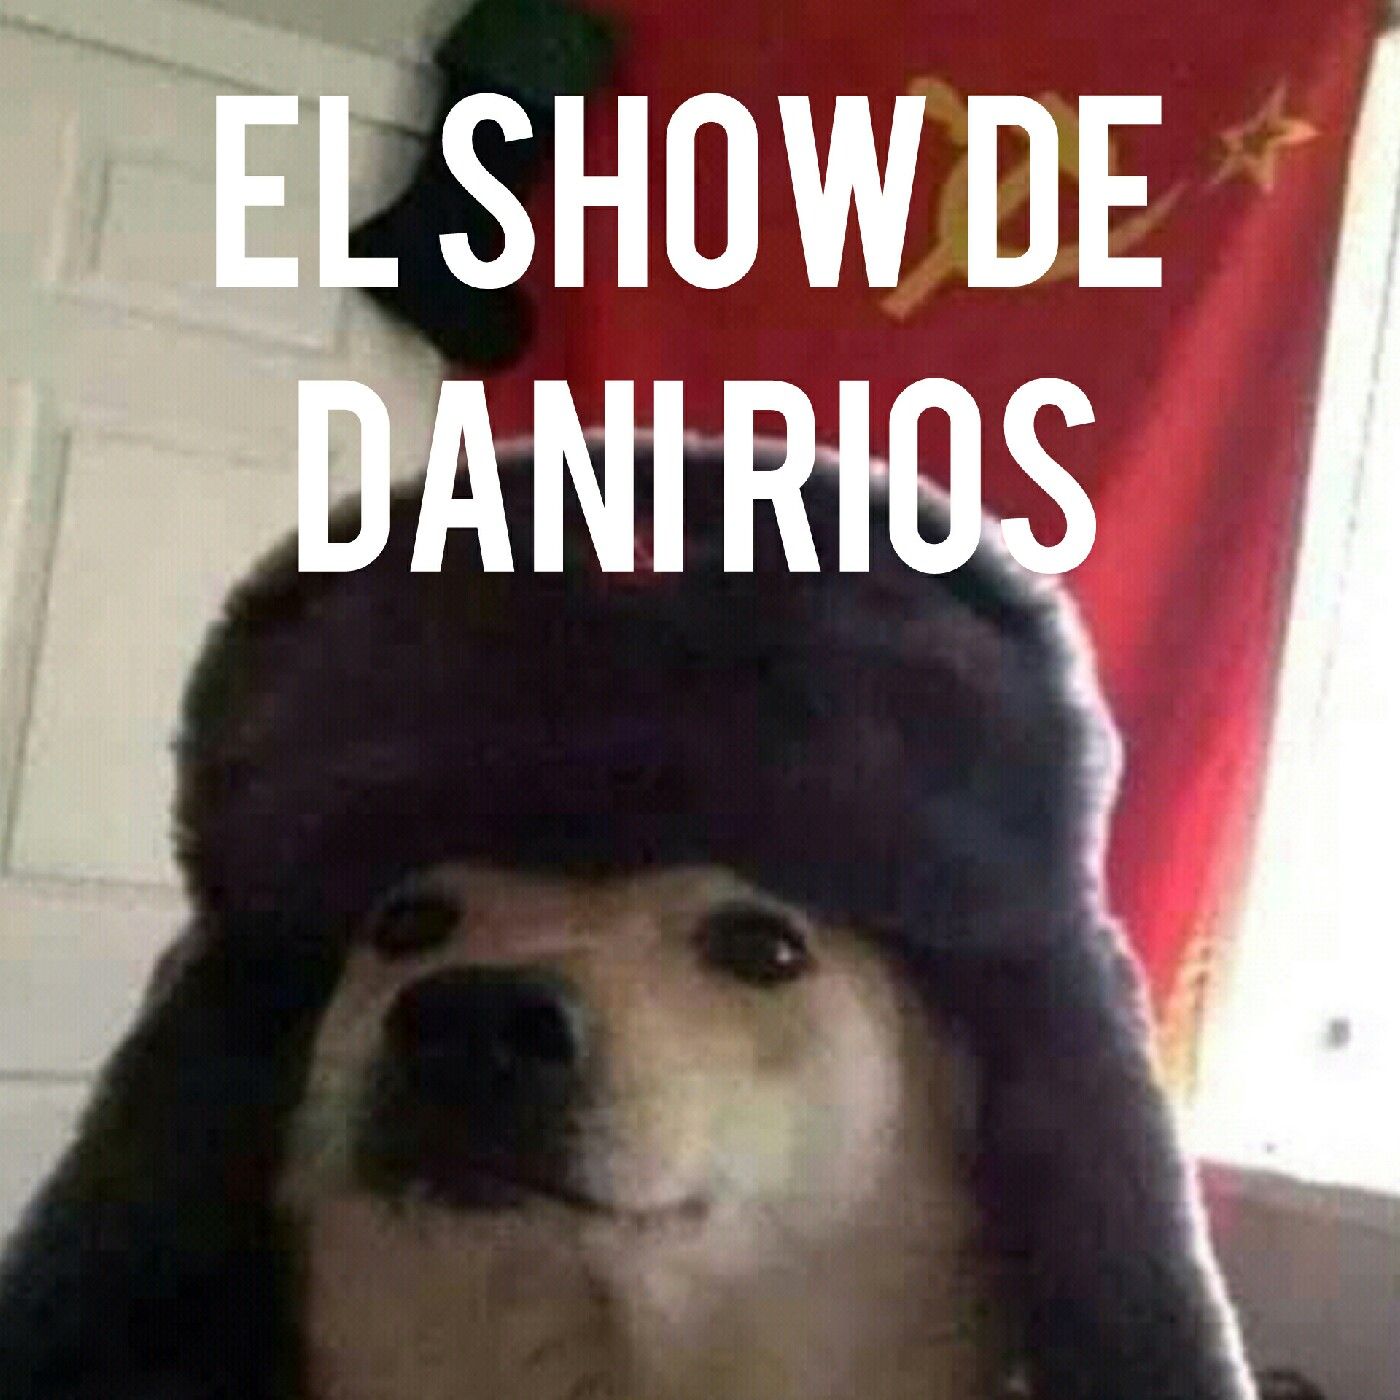 El show de Danhi Rios